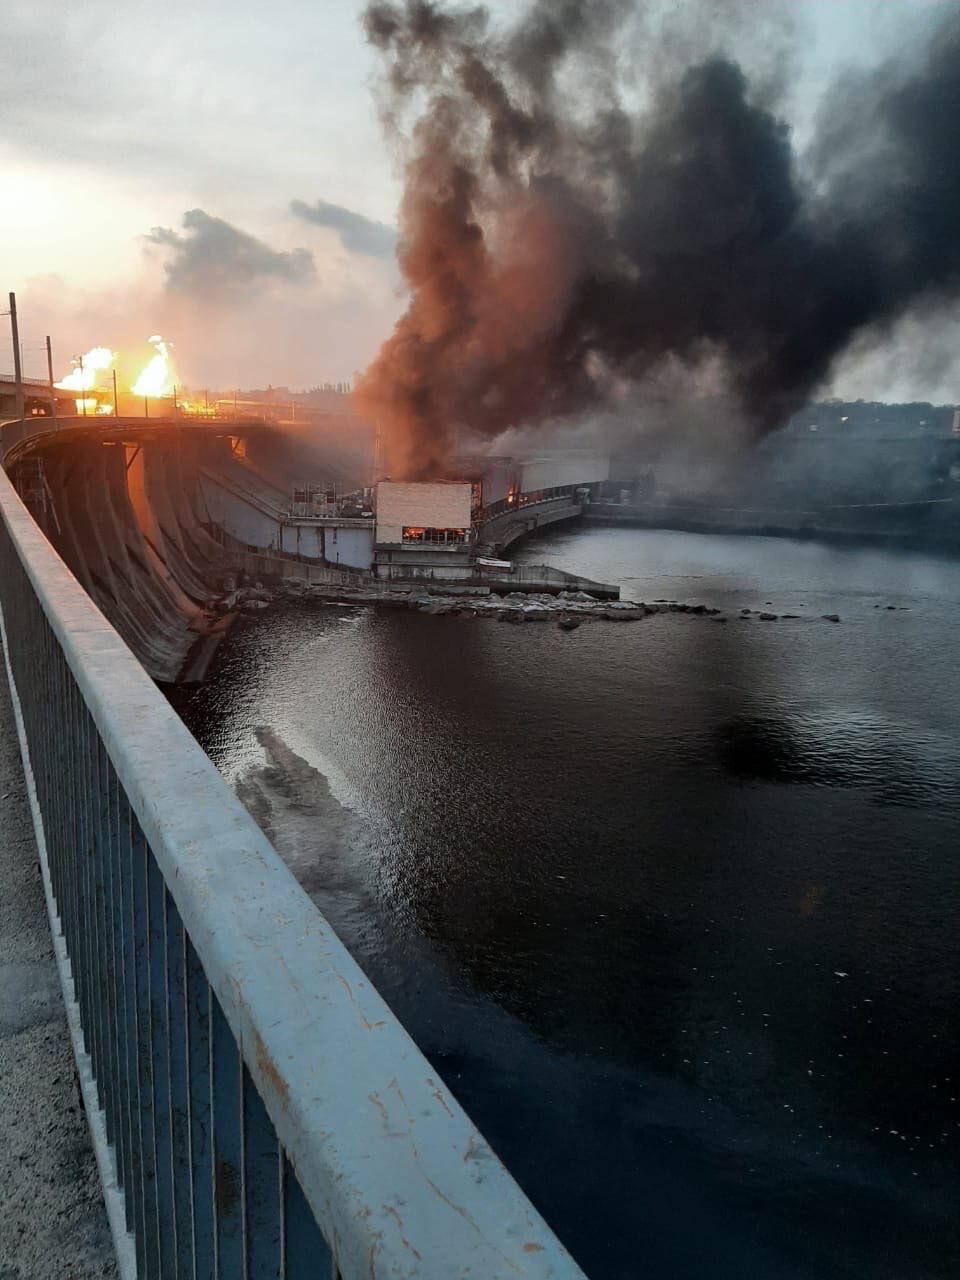 Огонь охватил транспорт: появились фото последствий удара по ДнепроГЭС